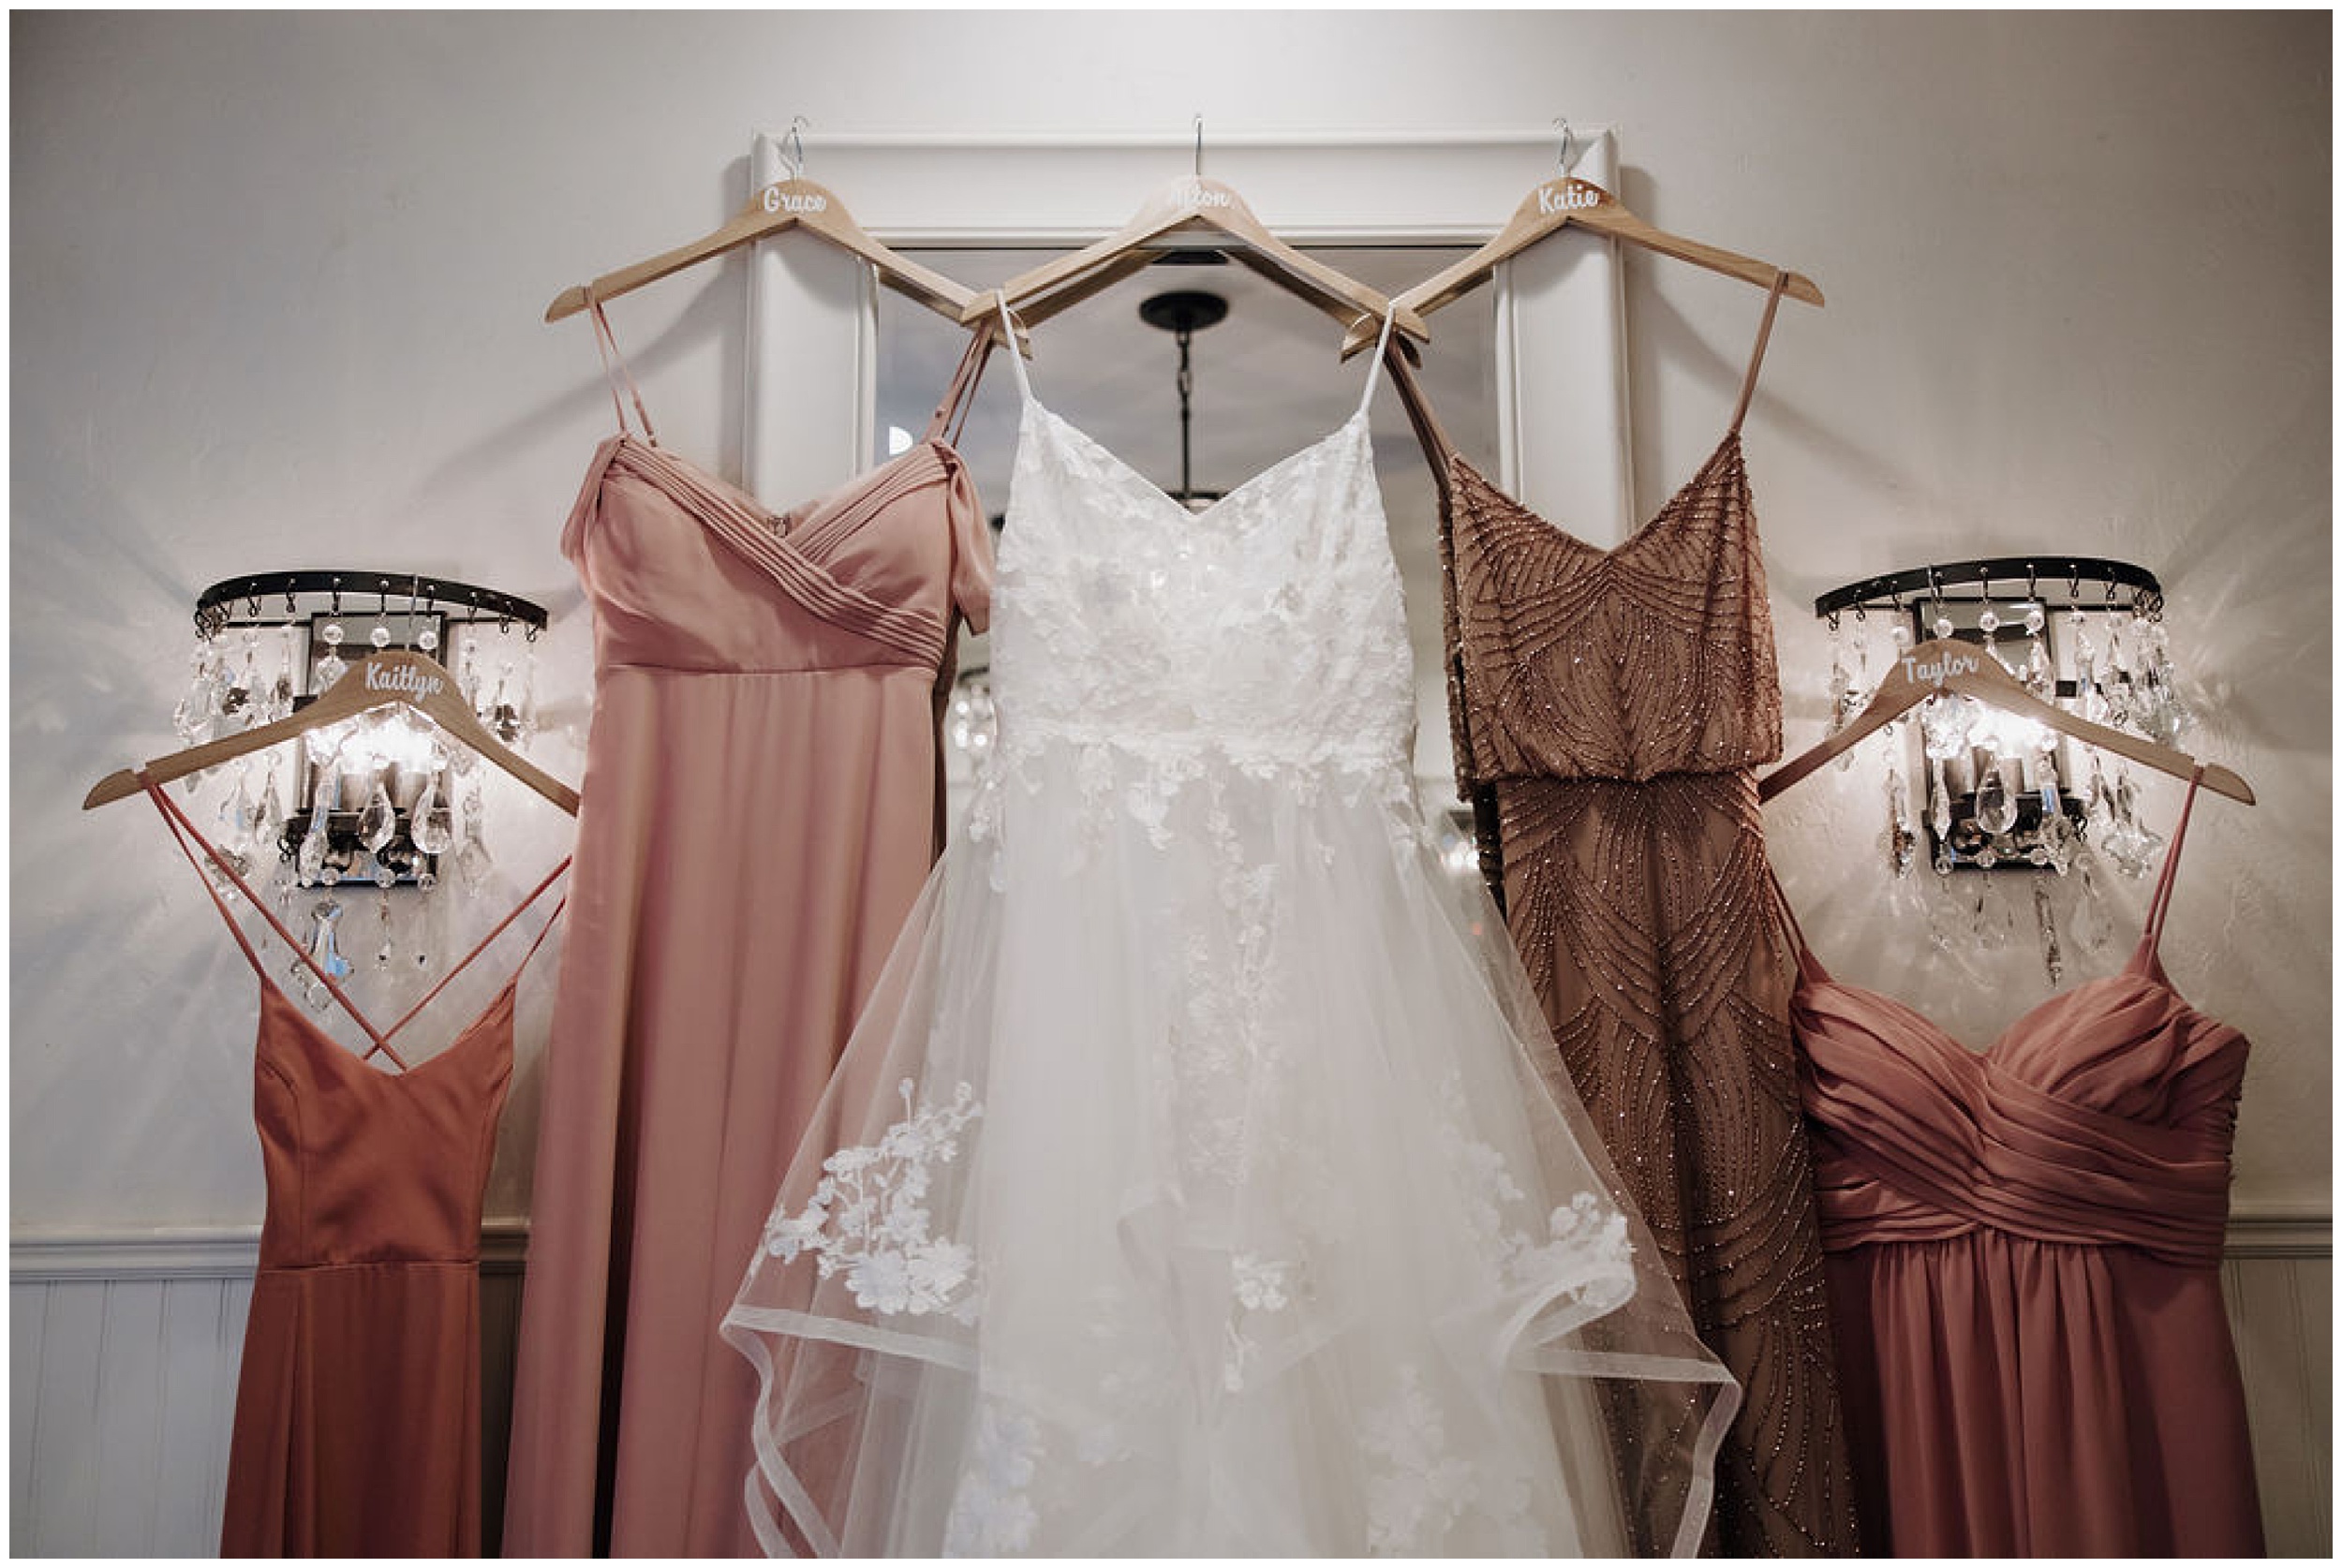 wedding dress and bridesmaids dresses hanging